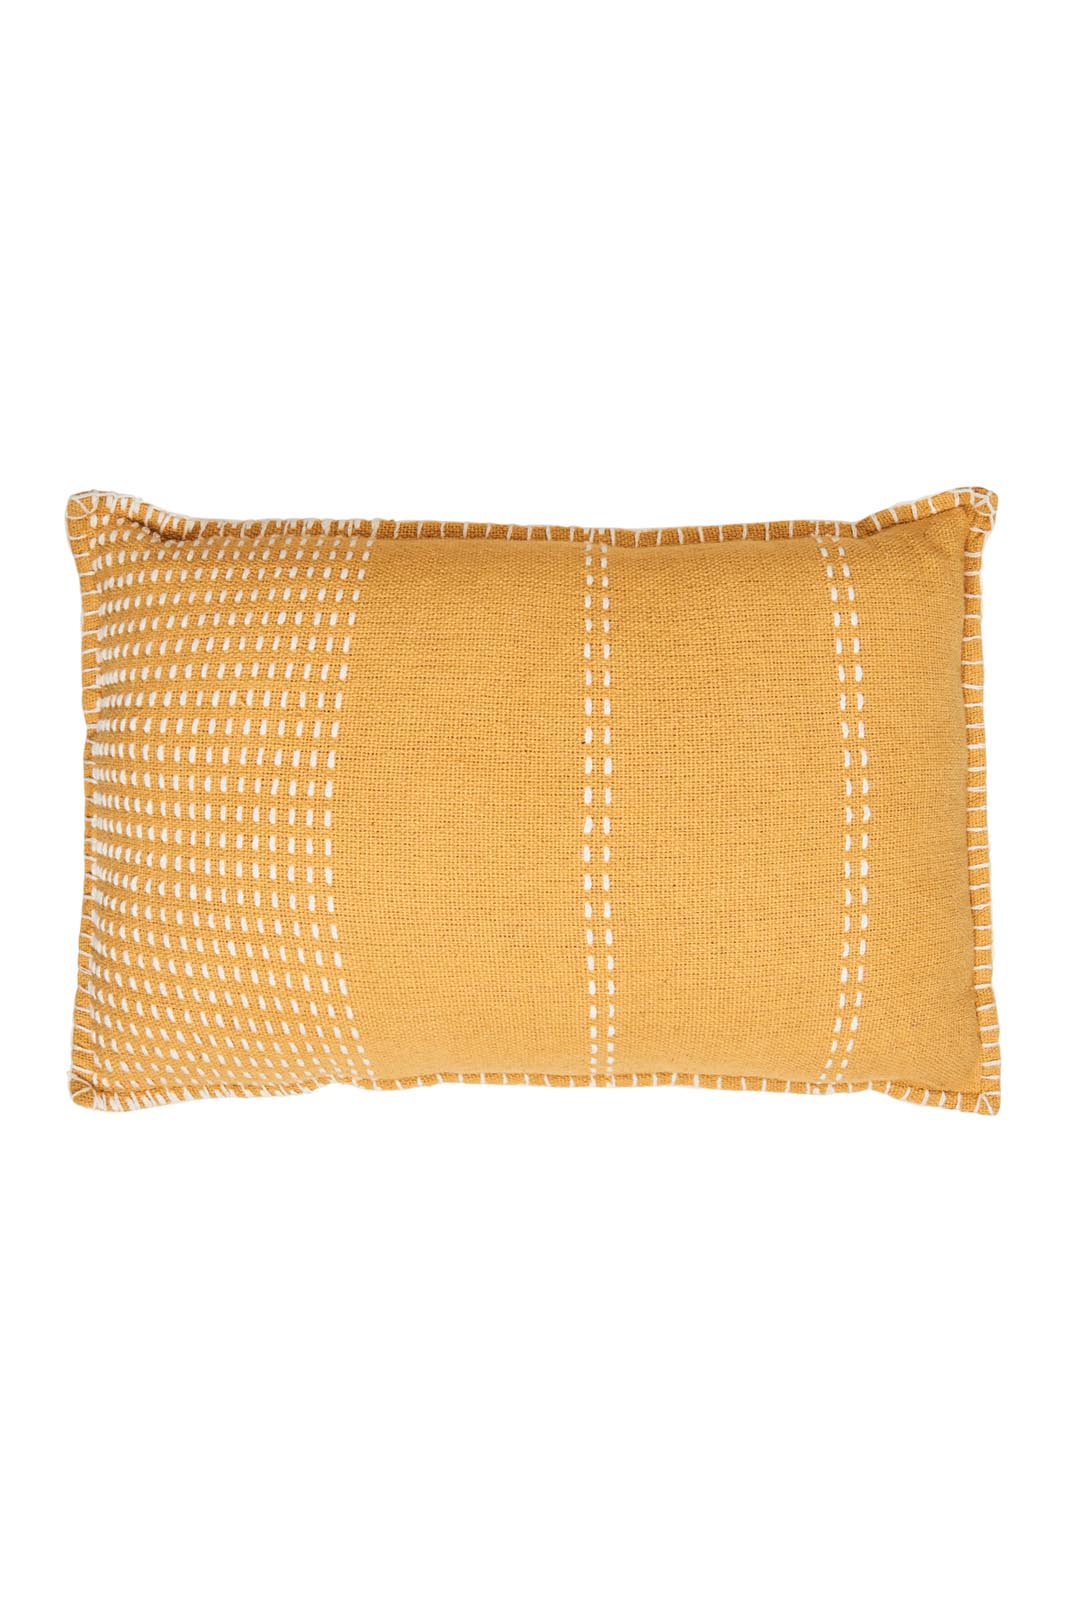 Amity Rectangle Cushion - Honeycomb - eb&ive Cushions